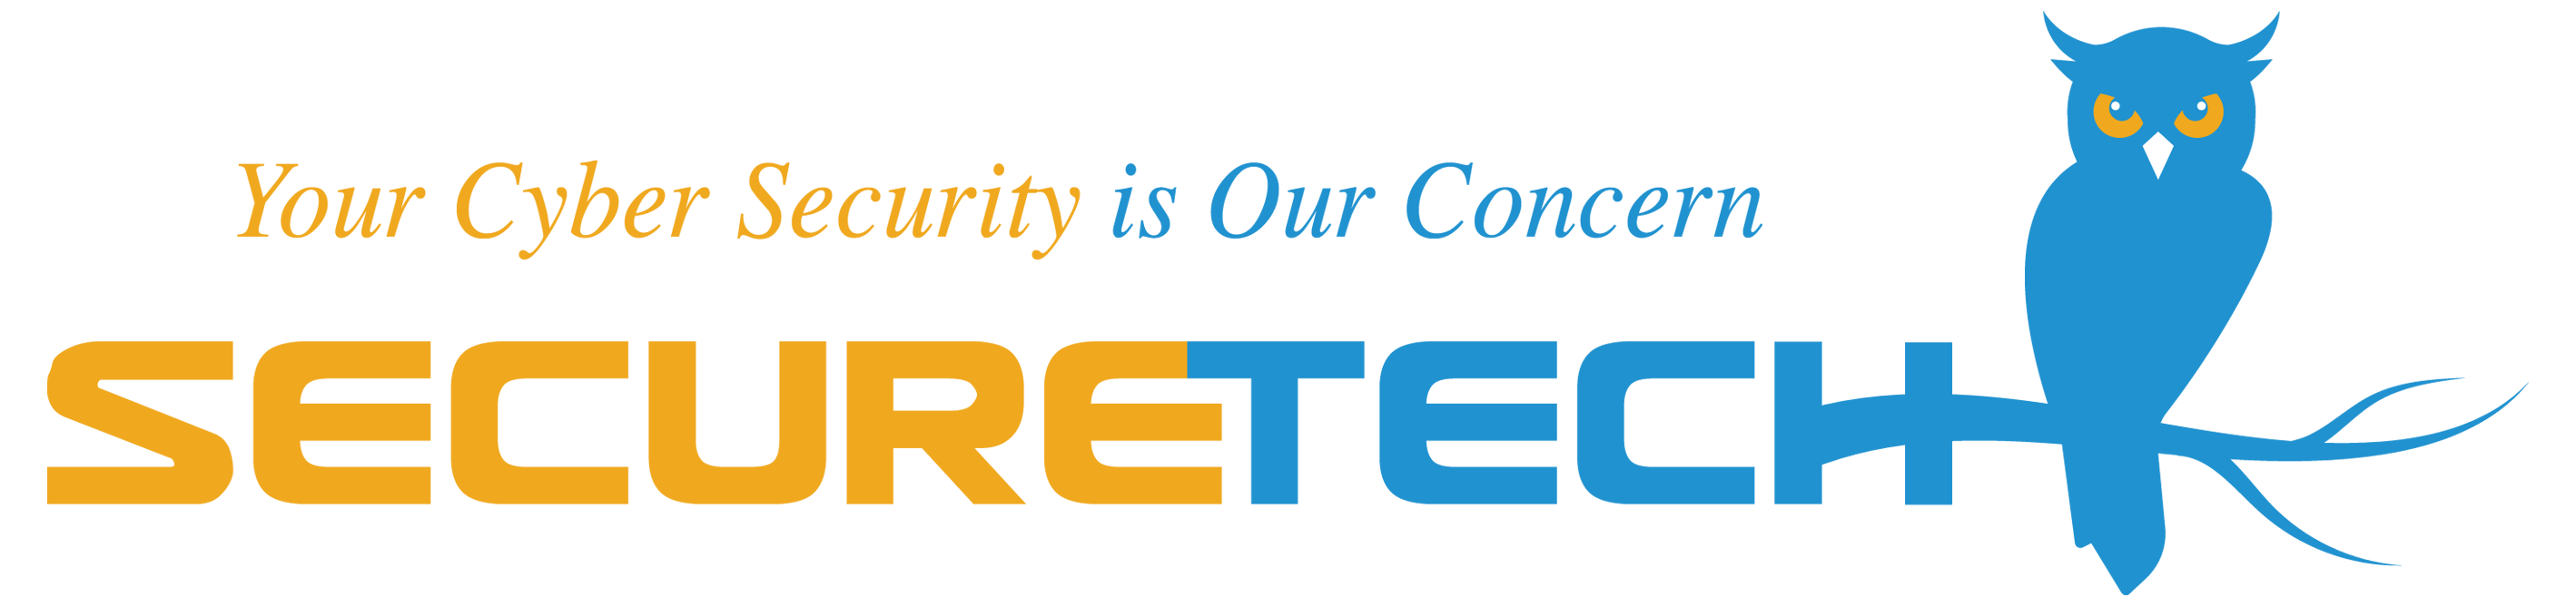 Securetech logo